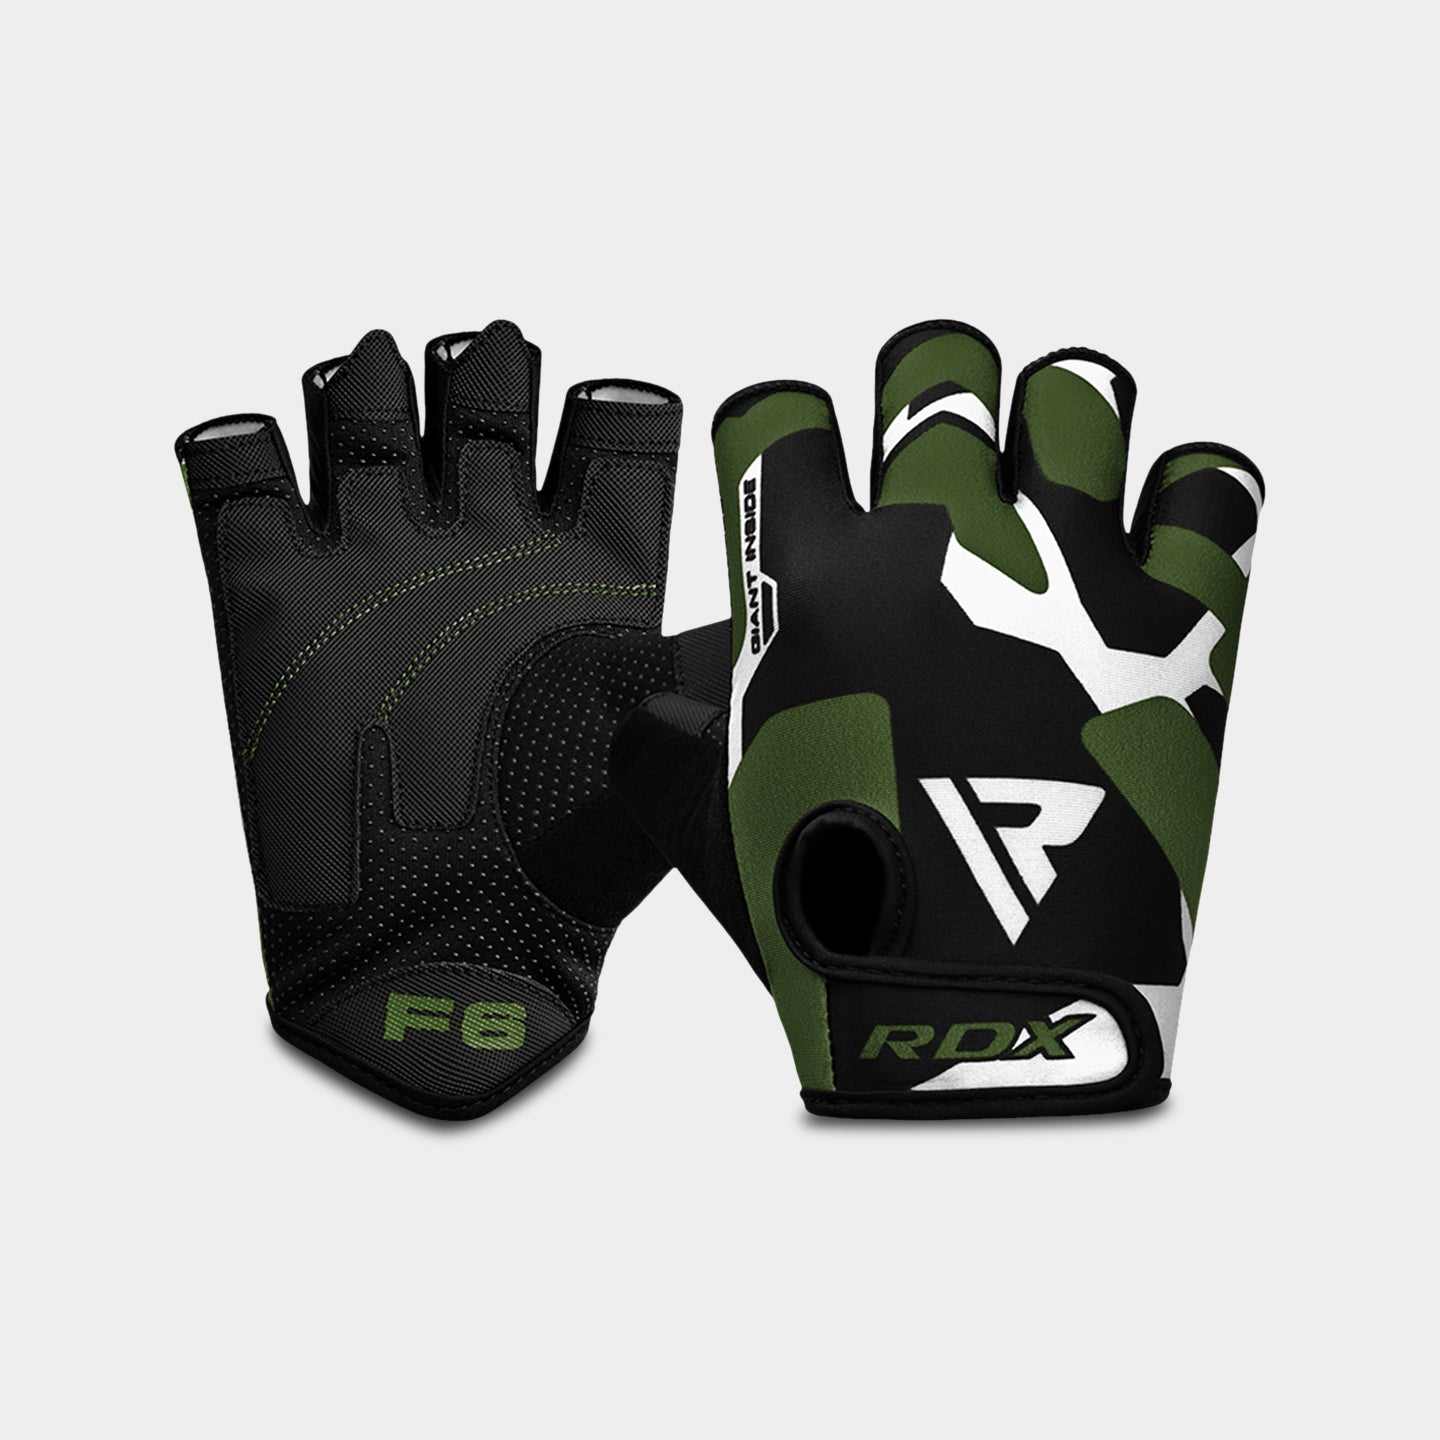 RDX Sports F6 Fitness Gym Gloves, S, Black/Green A1